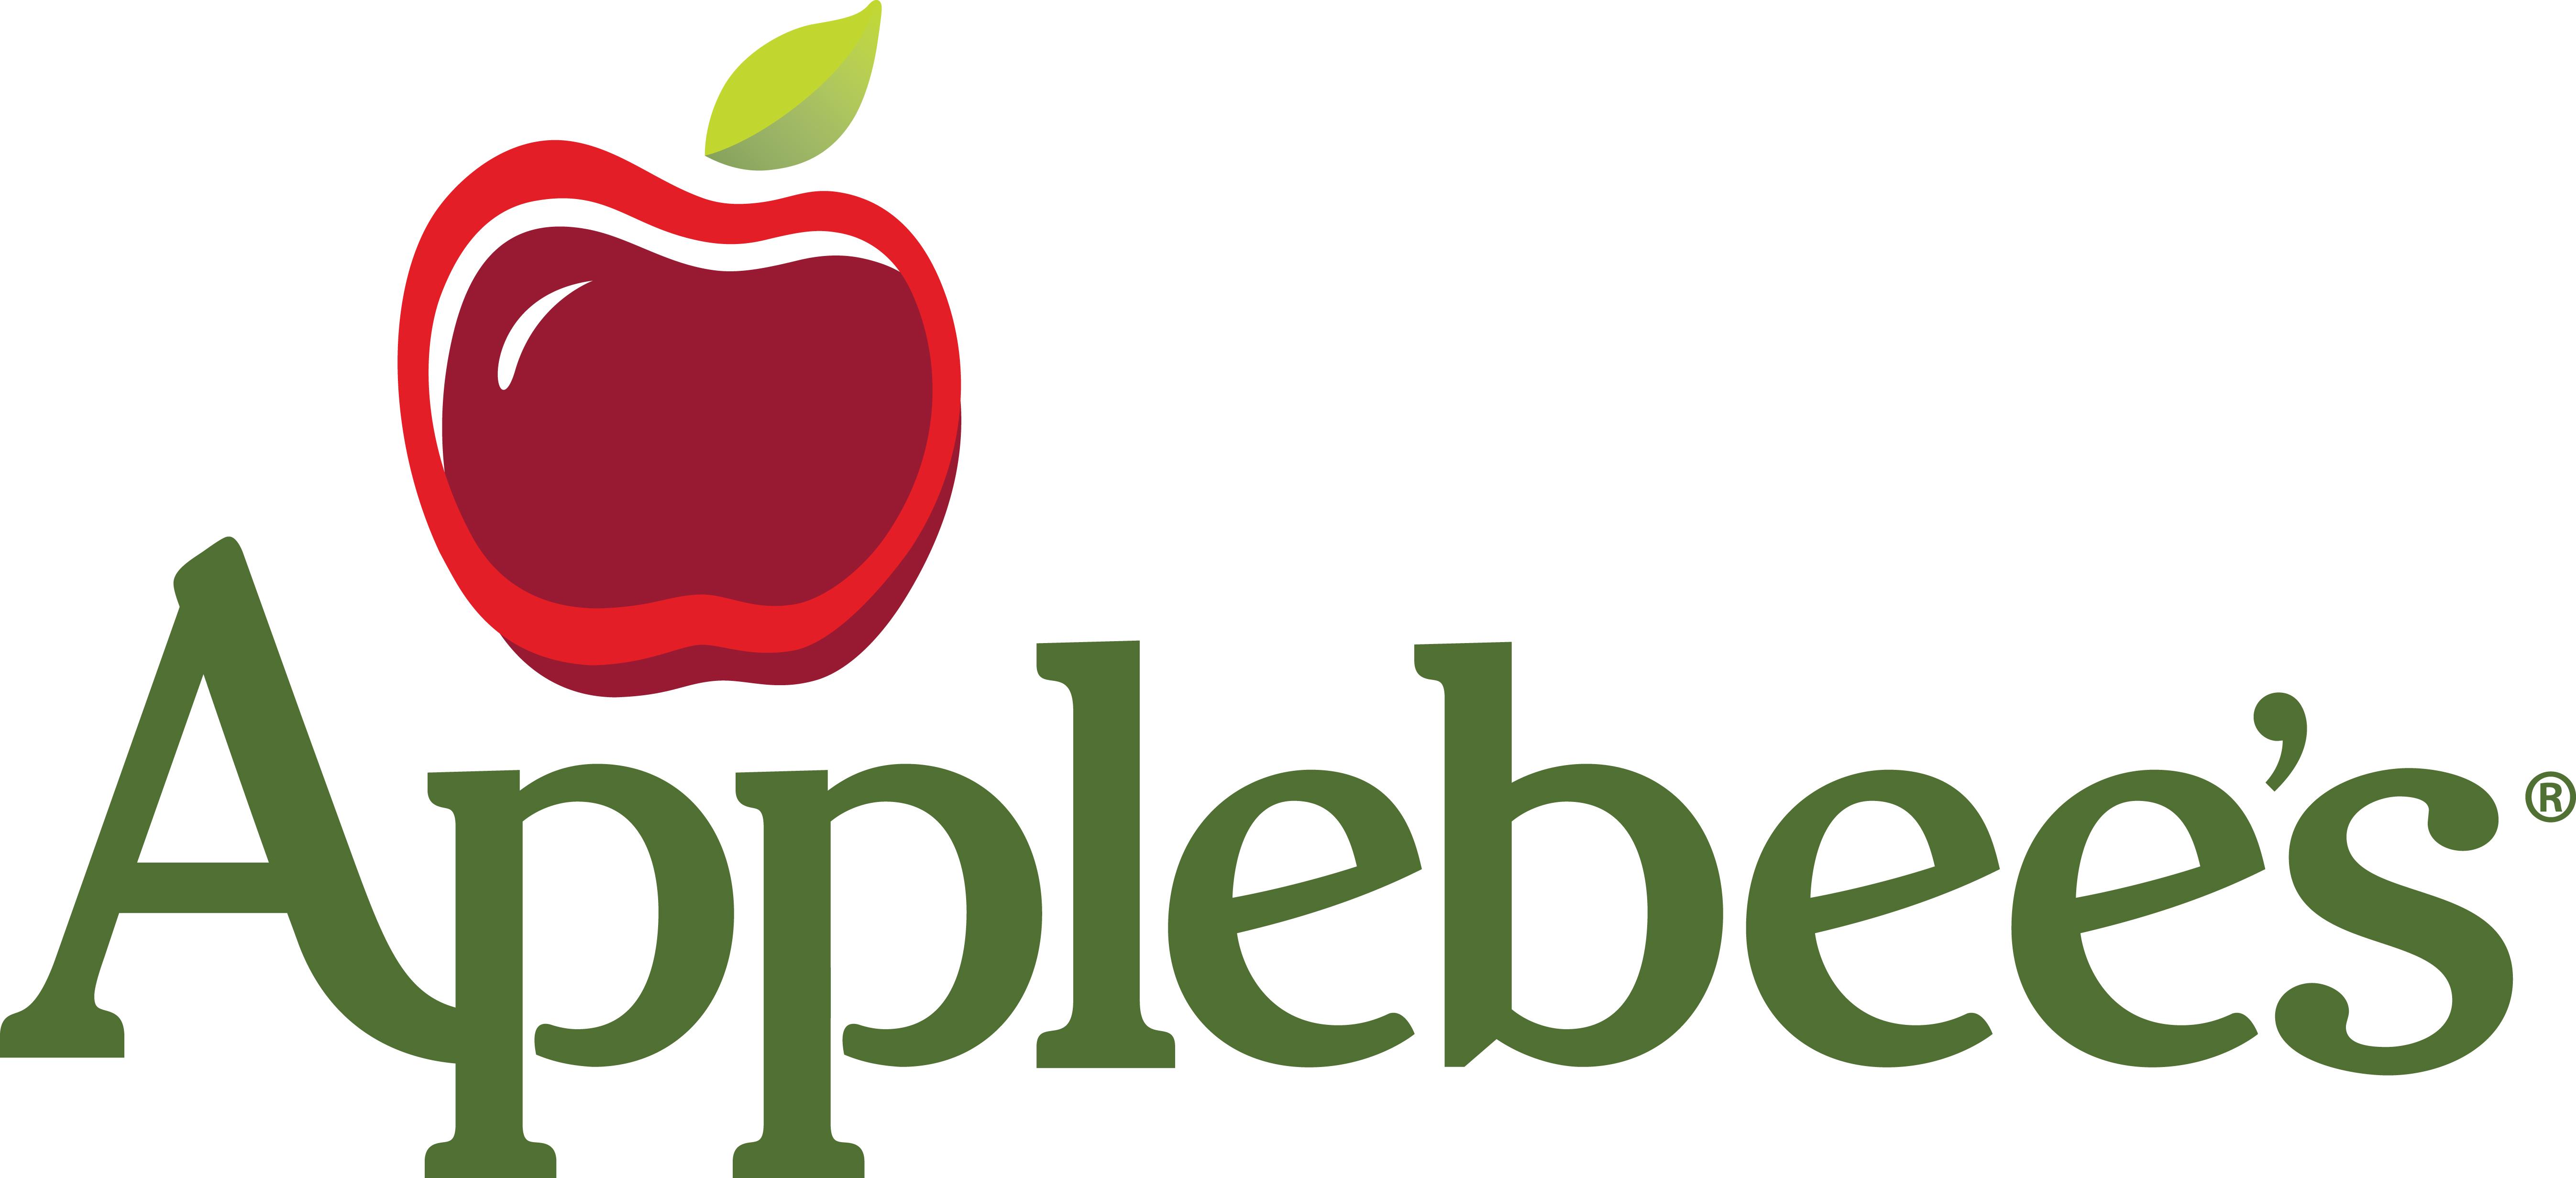 Applebee's 2013 Logo - Applebee's logo In Schools of Tacoma